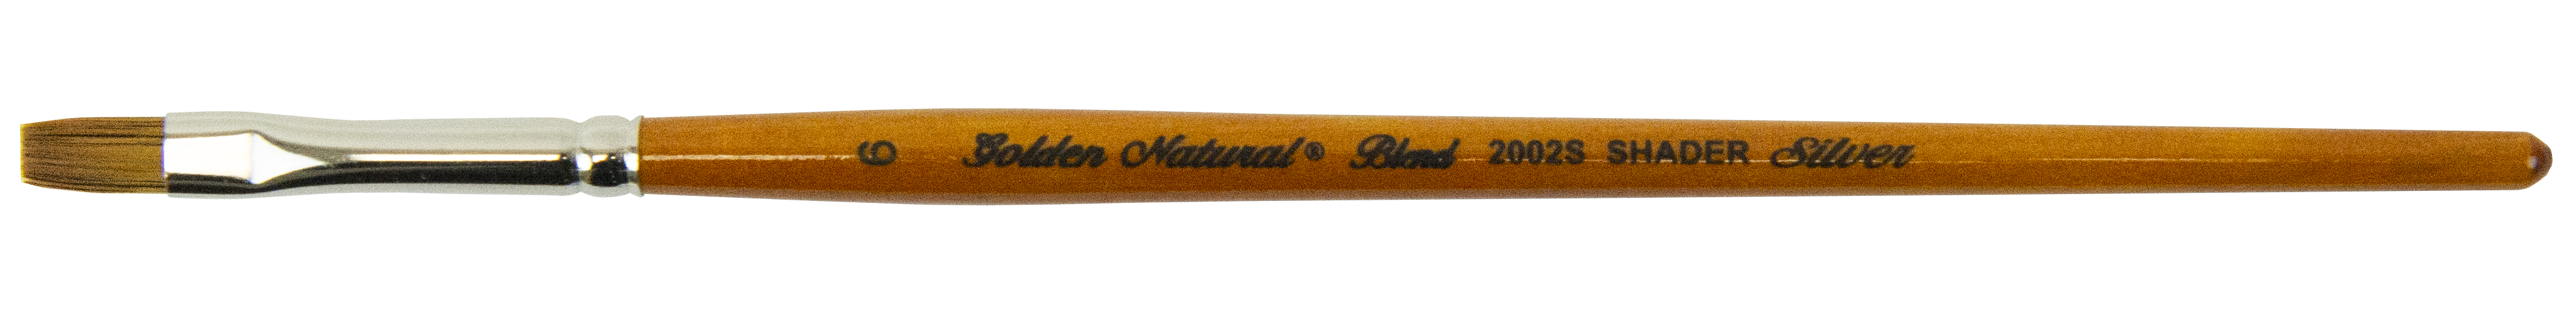 Silver Brush  Golden Natural 2002S Shader